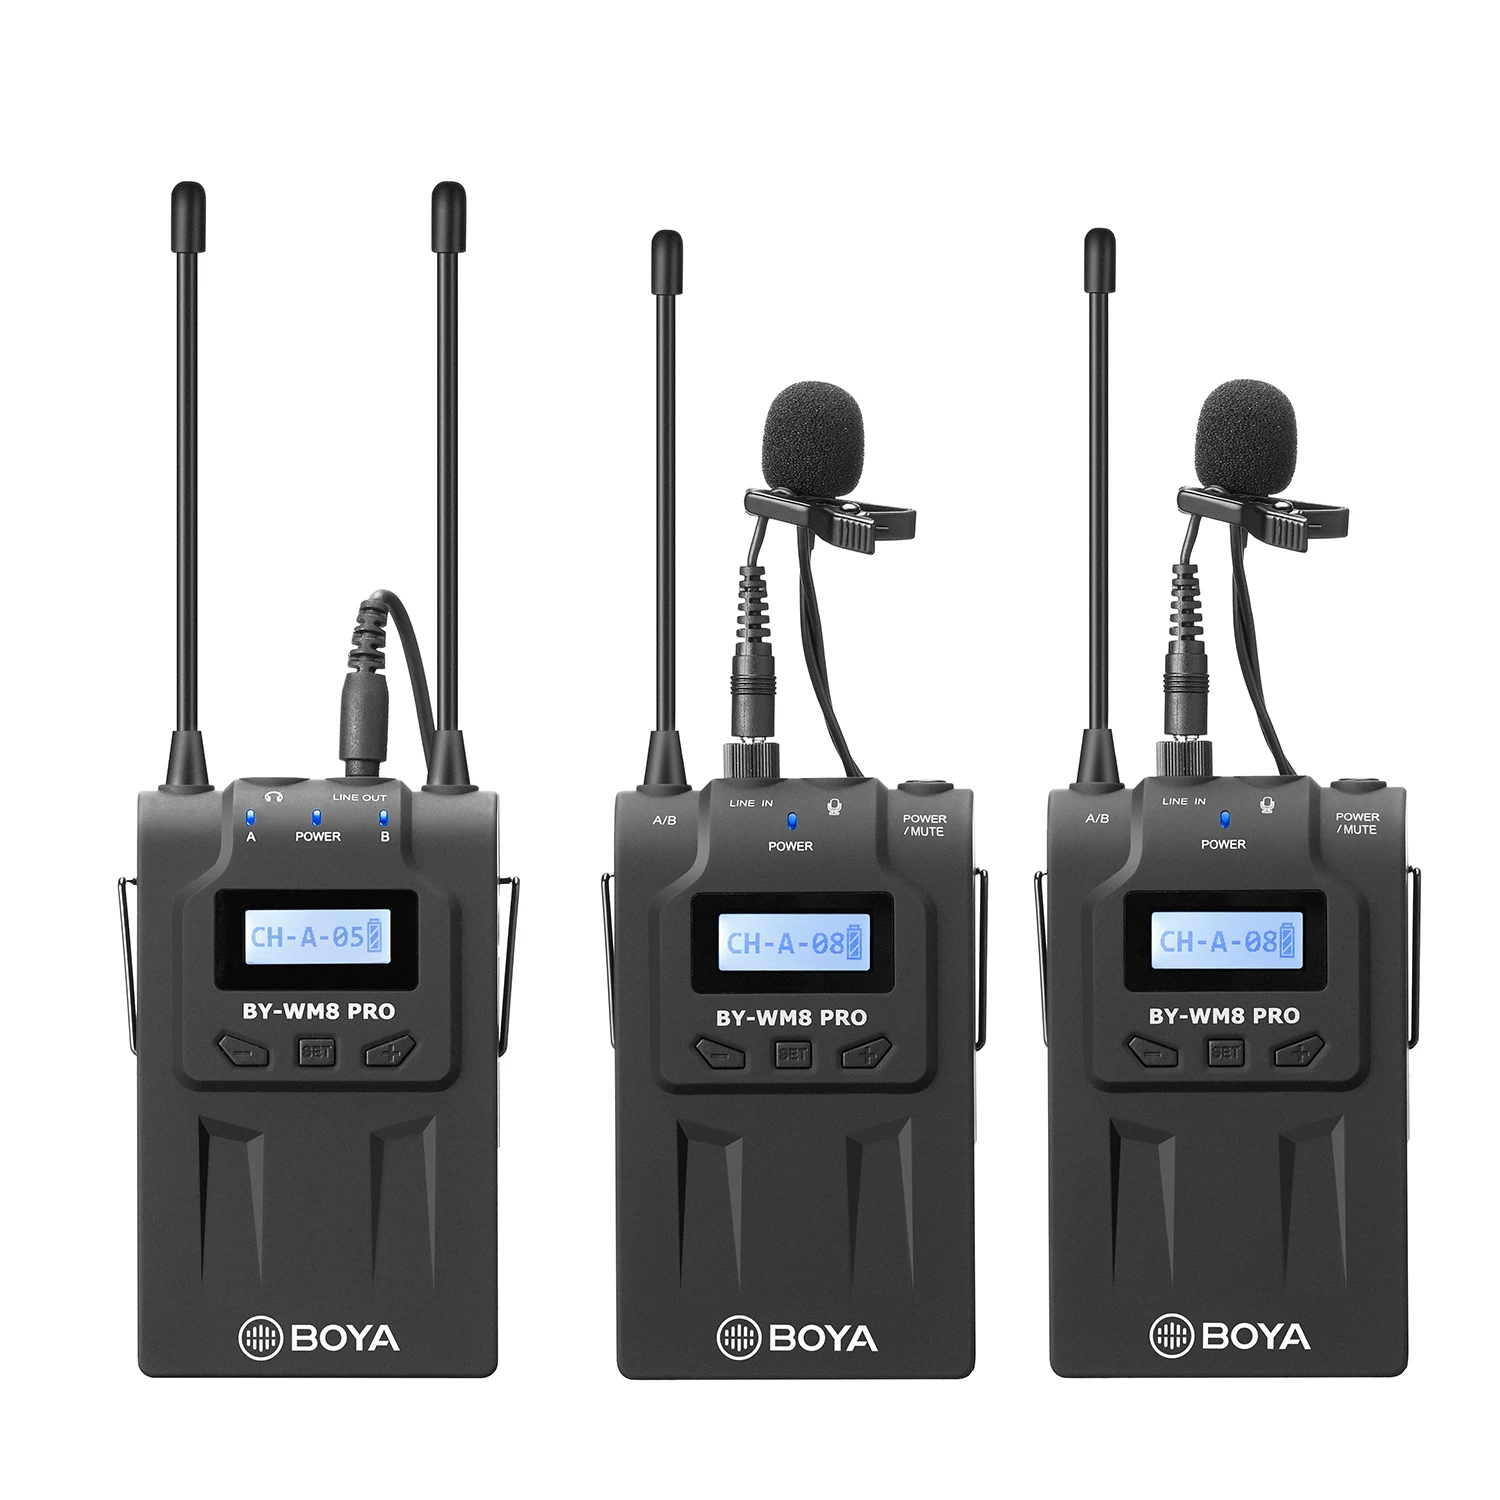 

BY-WM8 Pro K2 Original BOYA Excellent UHF Wireless Microphone System for for DSLRs, Mirrorless, Pro Video Capturing Interviews